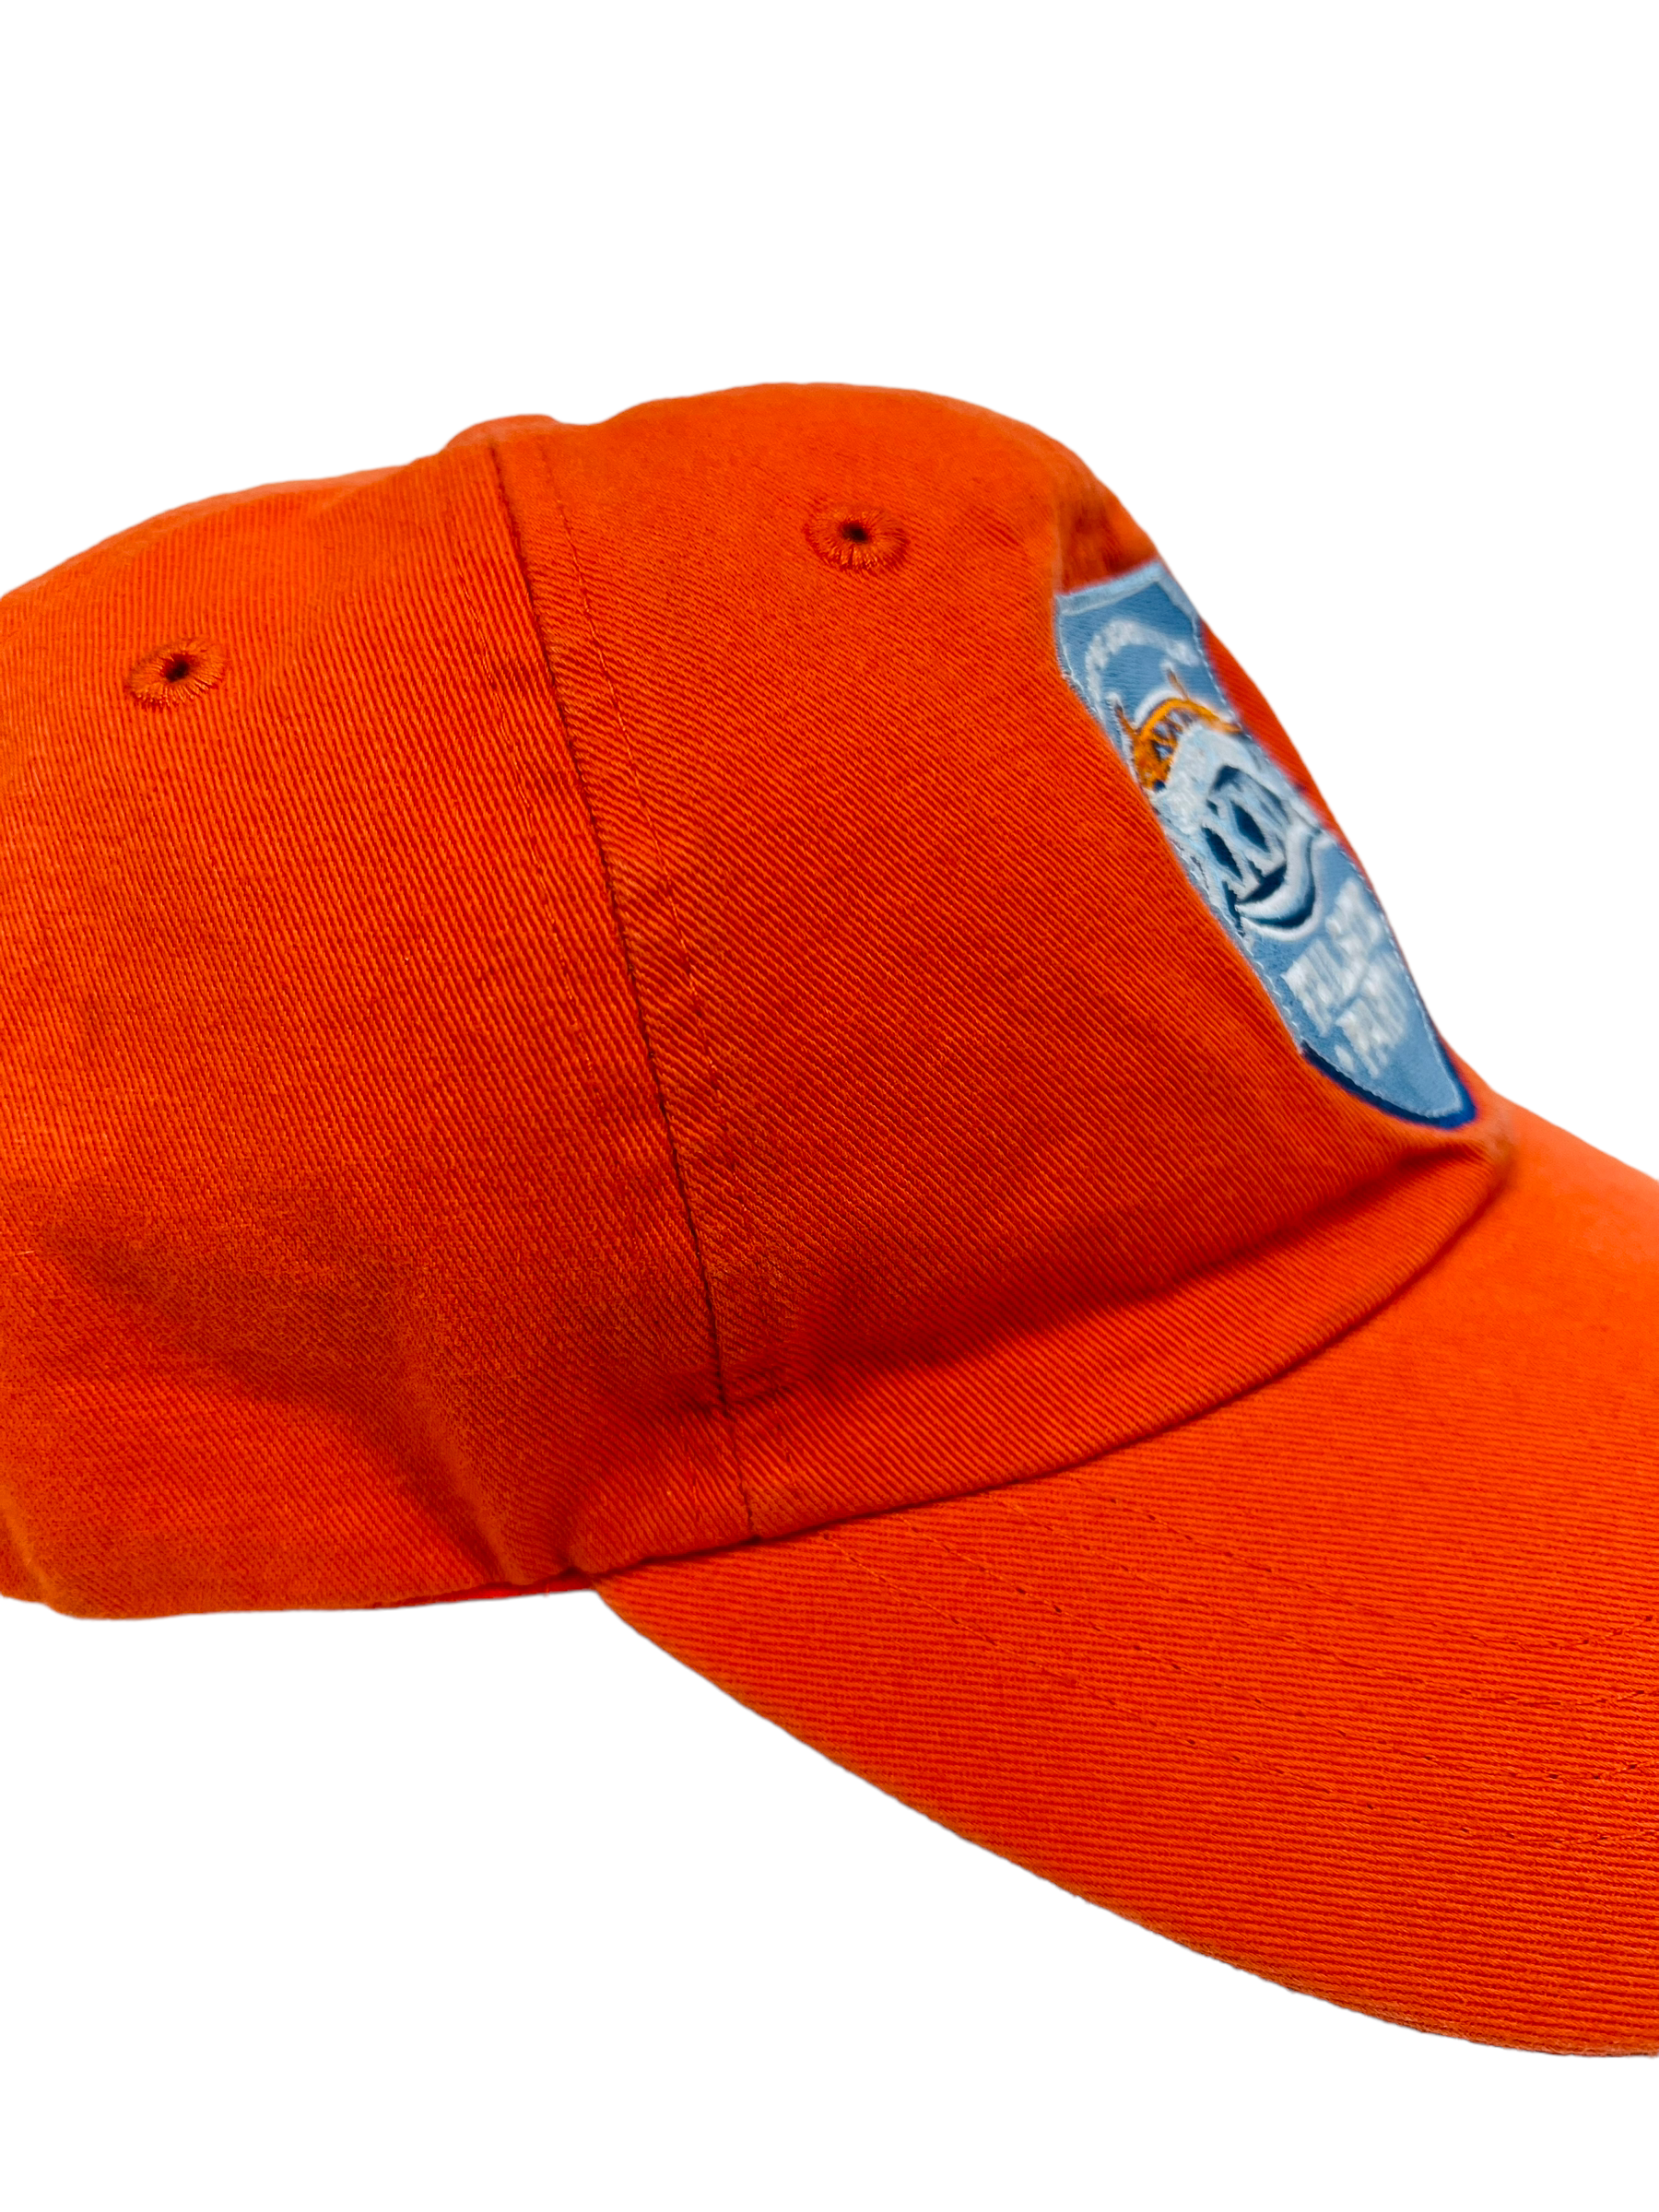 Washington Redskins Vintage 90's New Era Pro Model Fitted Cap Hat -  Size: 7